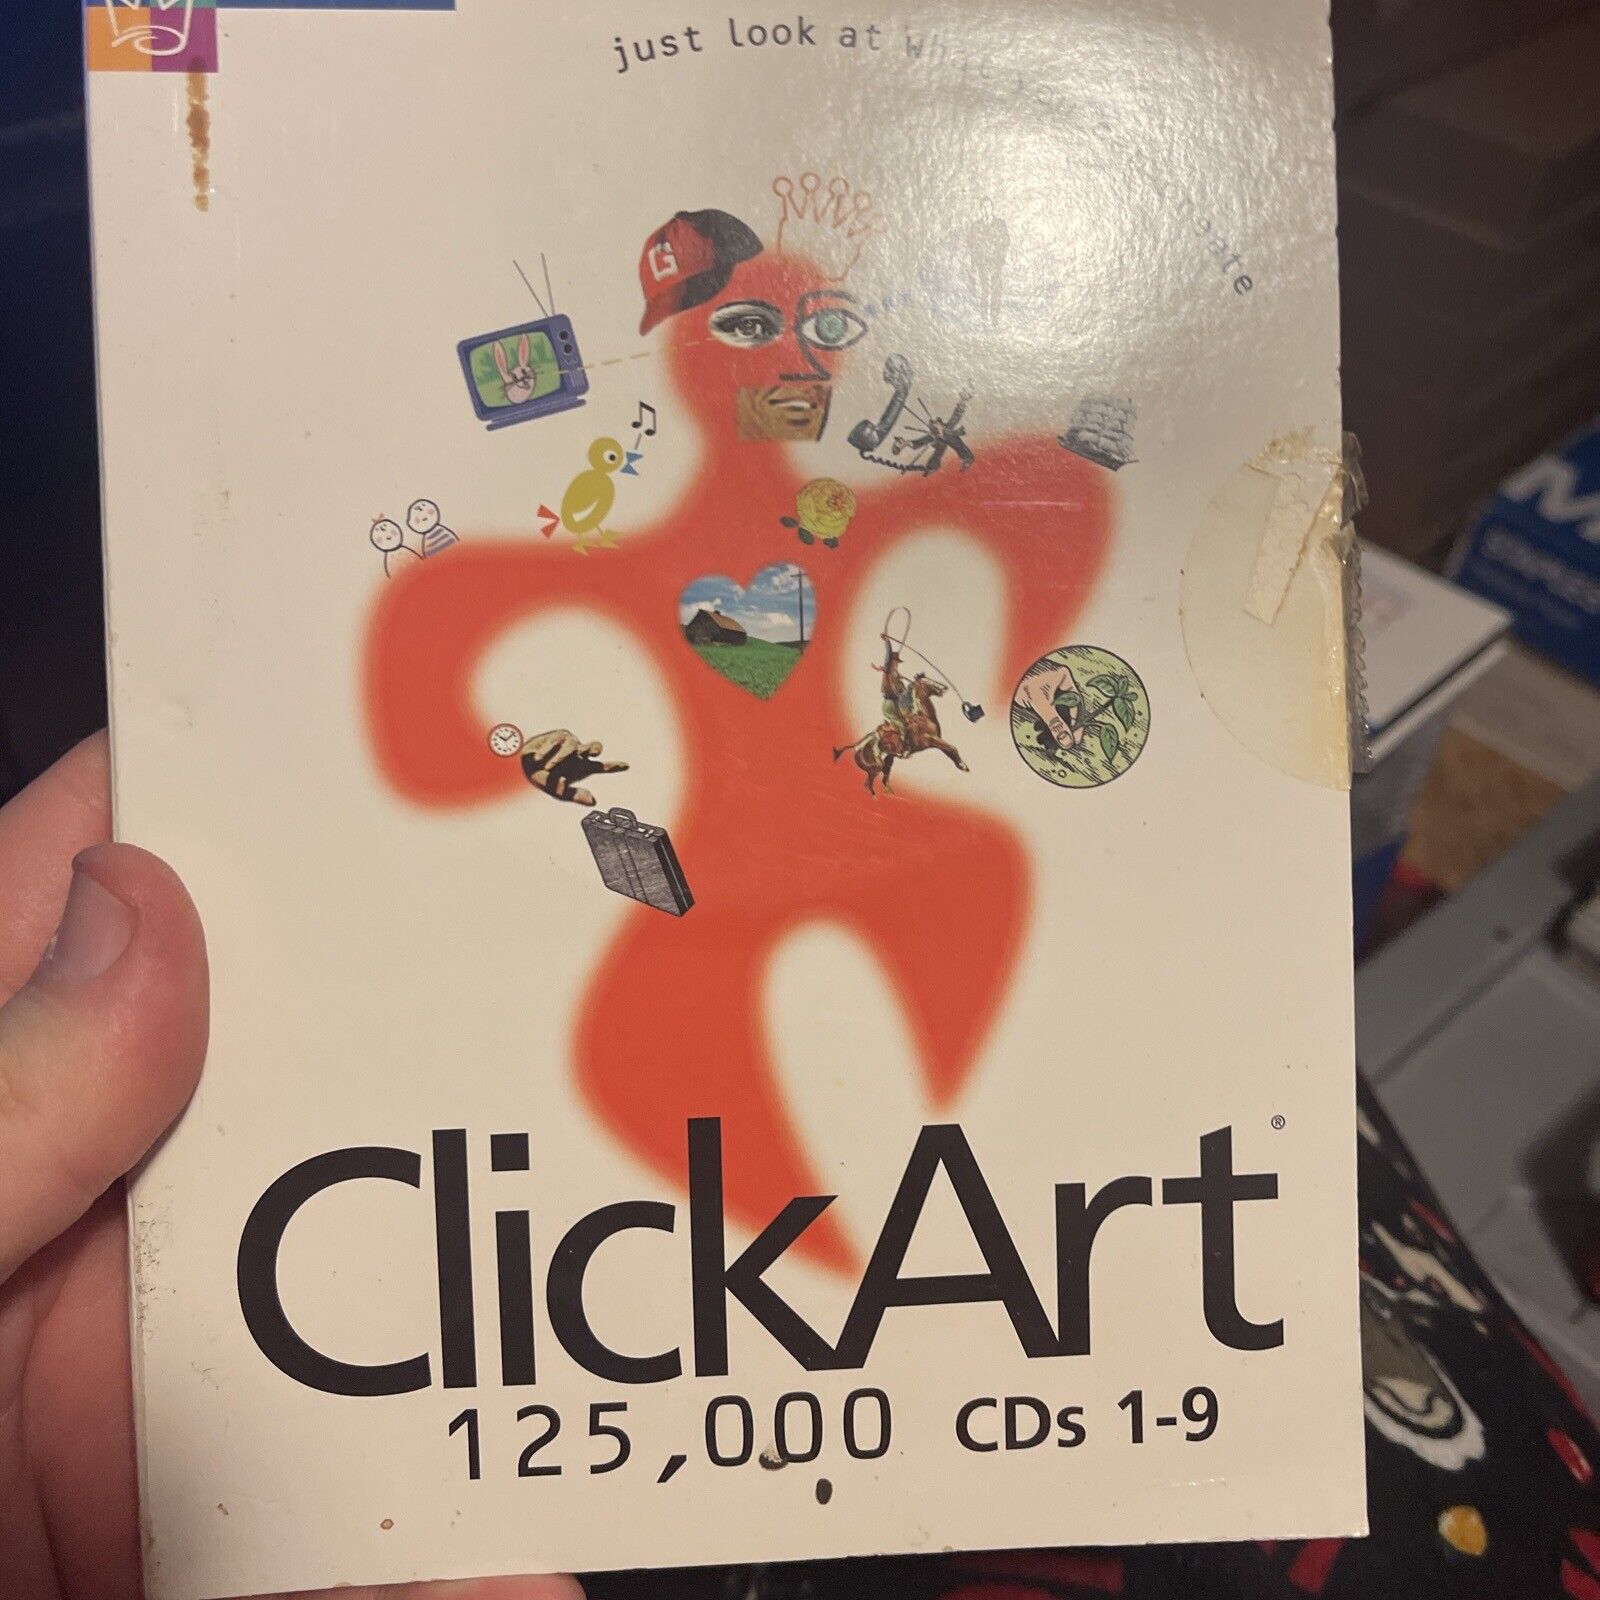 ClickArt Broderbund 125,000 CDs 1-9 Software Images Windows Clip Art Images